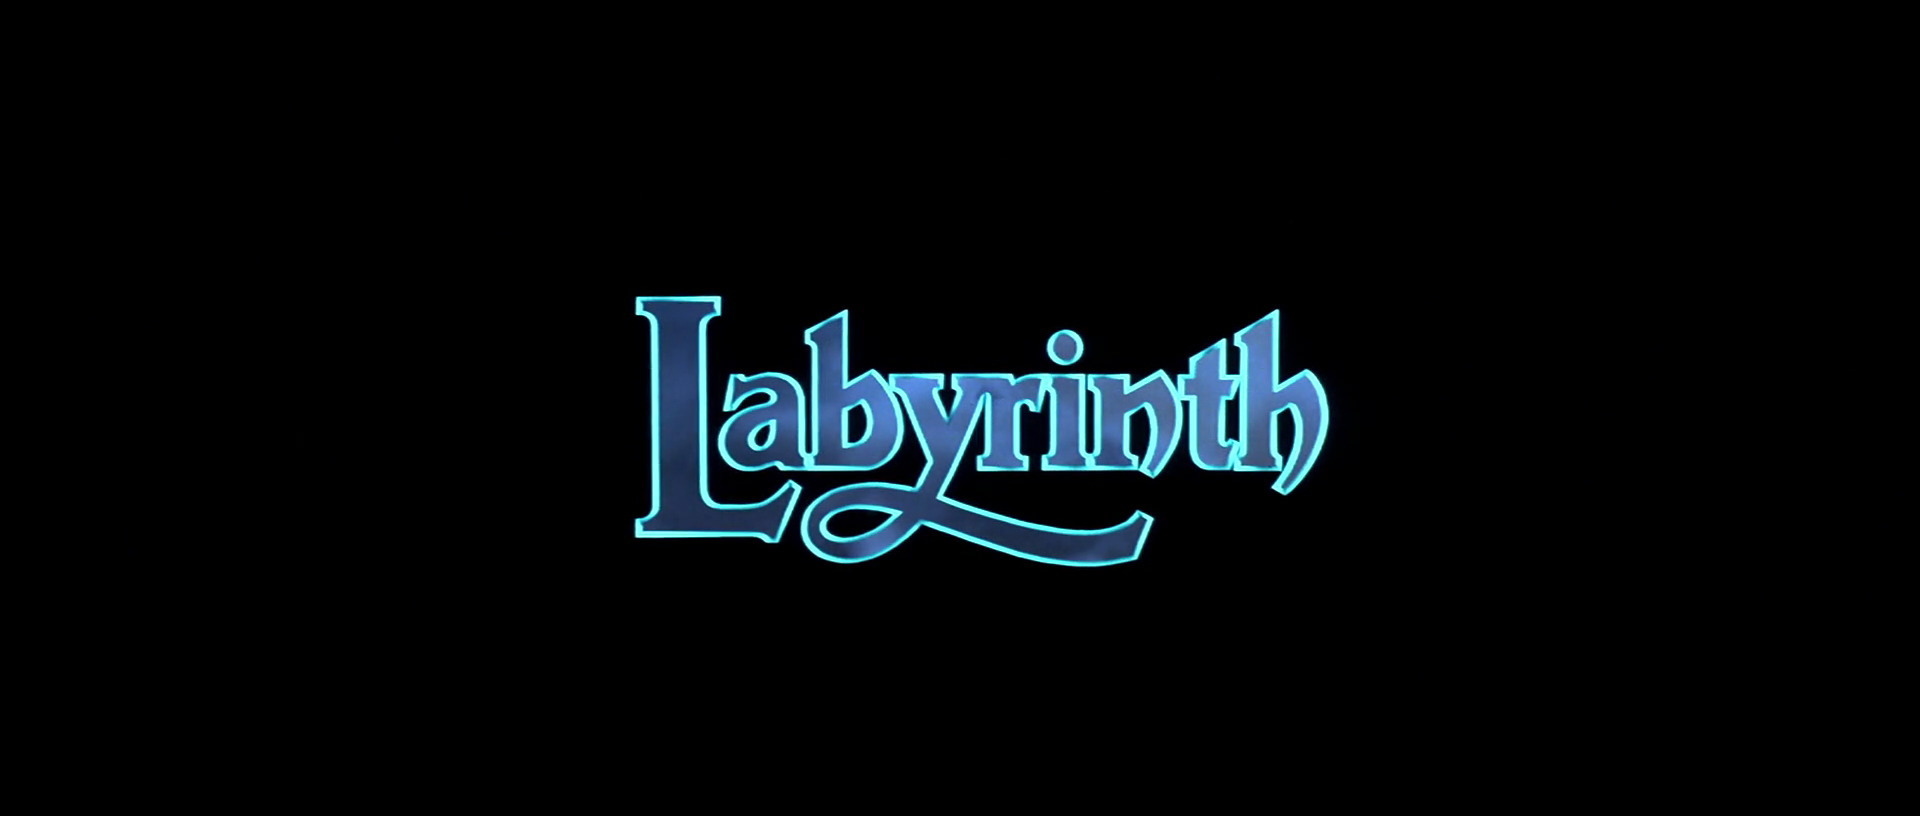 Image - Labyrinth-movie-screencaps.com-1.jpg - Logopedia, the logo and ...